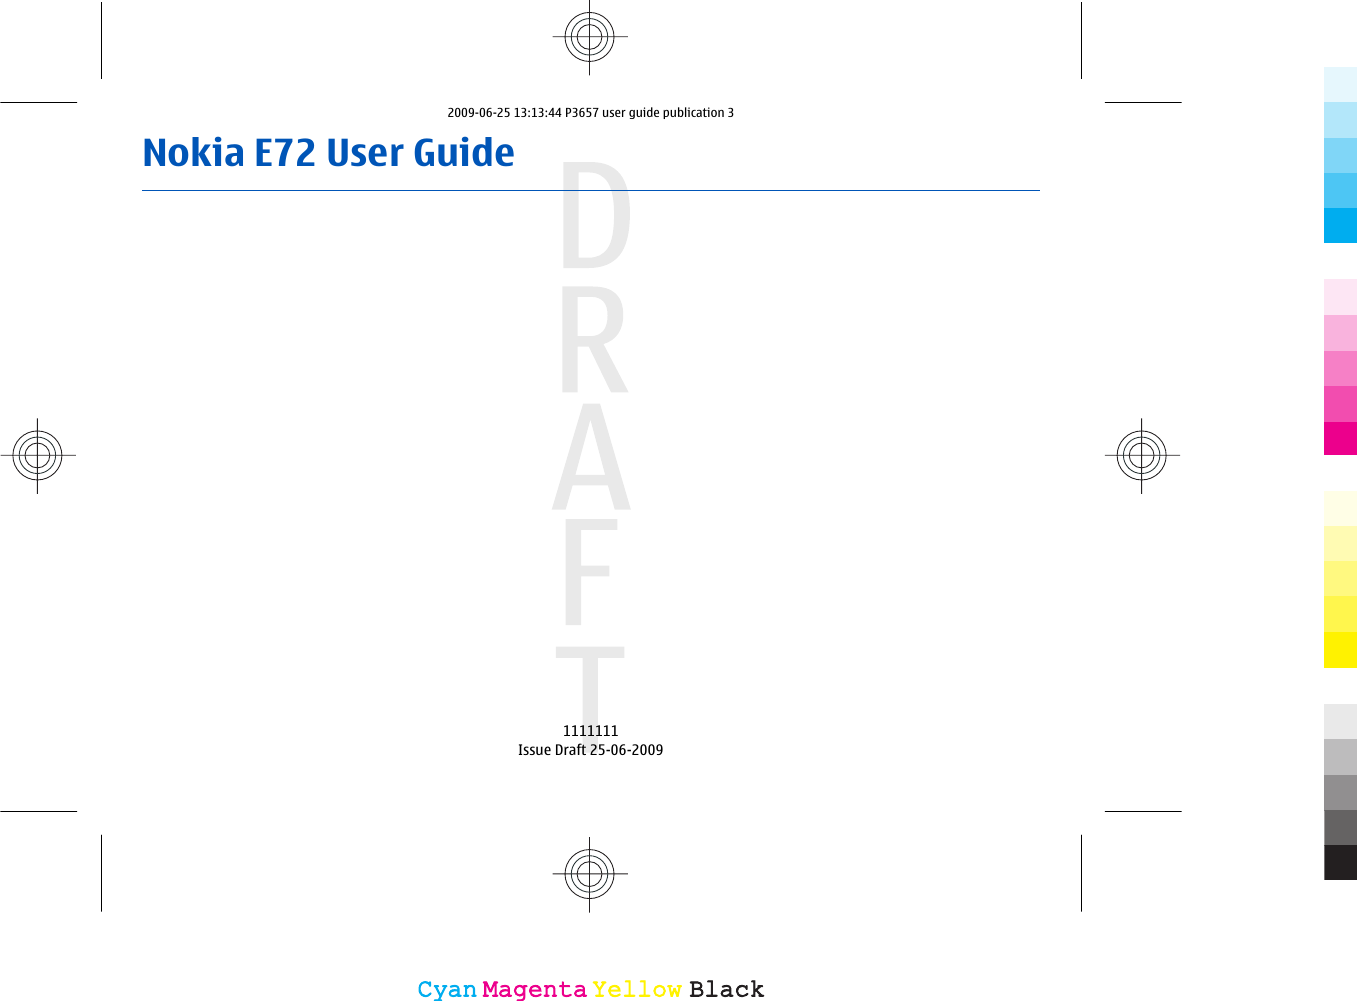 Nokia E72 User Guide1111111Issue Draft 25-06-2009CyanCyanMagentaMagentaYellowYellowBlackBlack2009-06-25 13:13:44 P3657 user guide publication 3